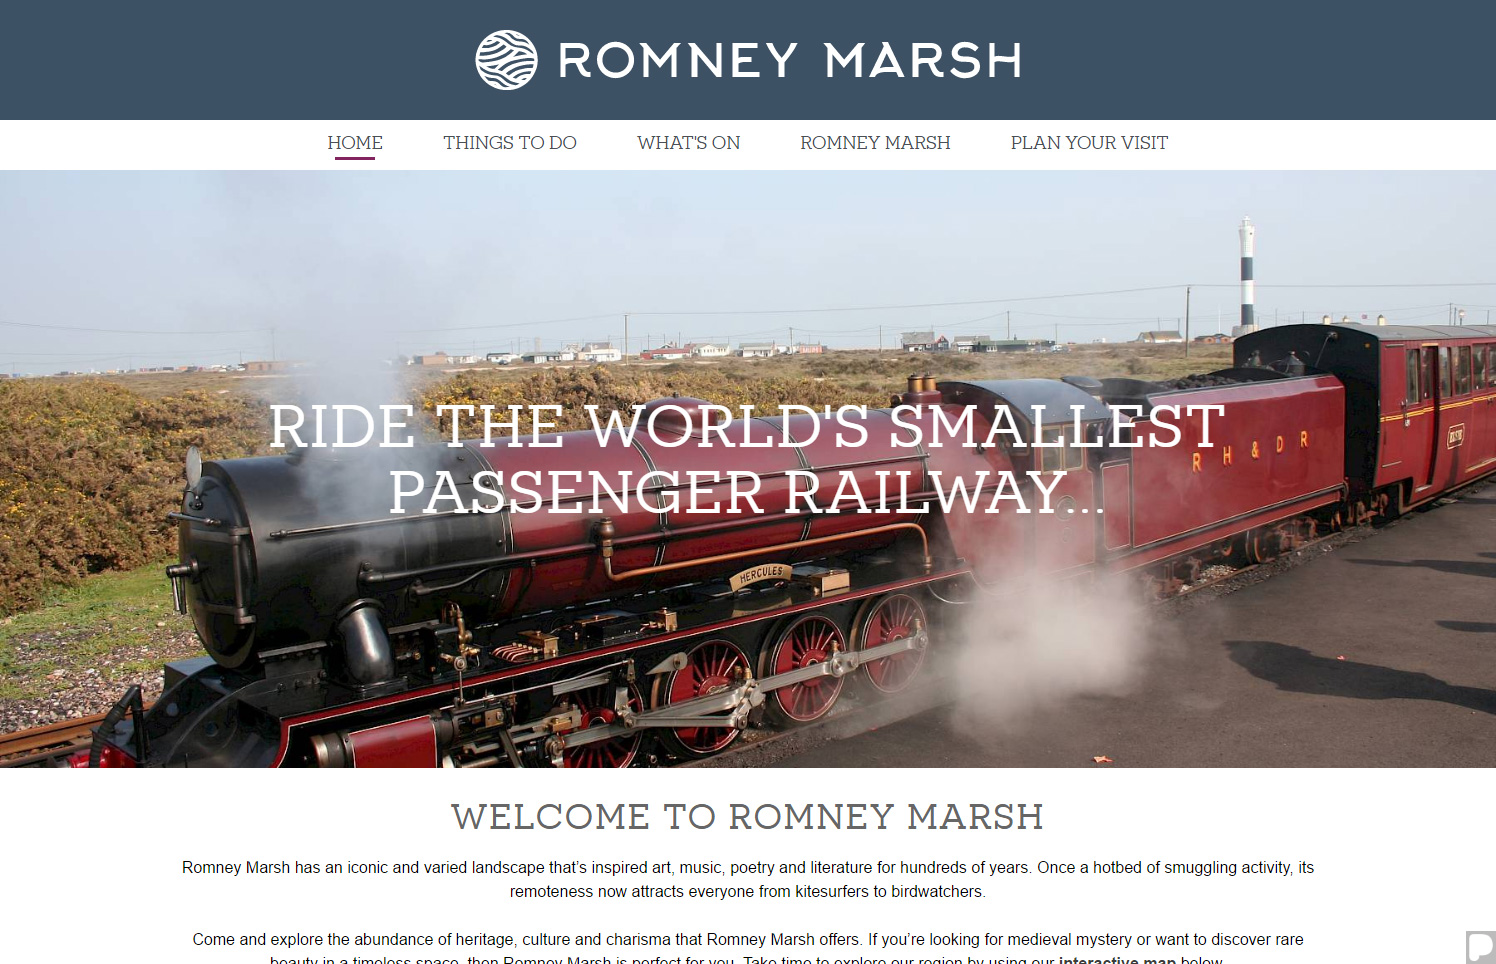 Visit Romney Marsh